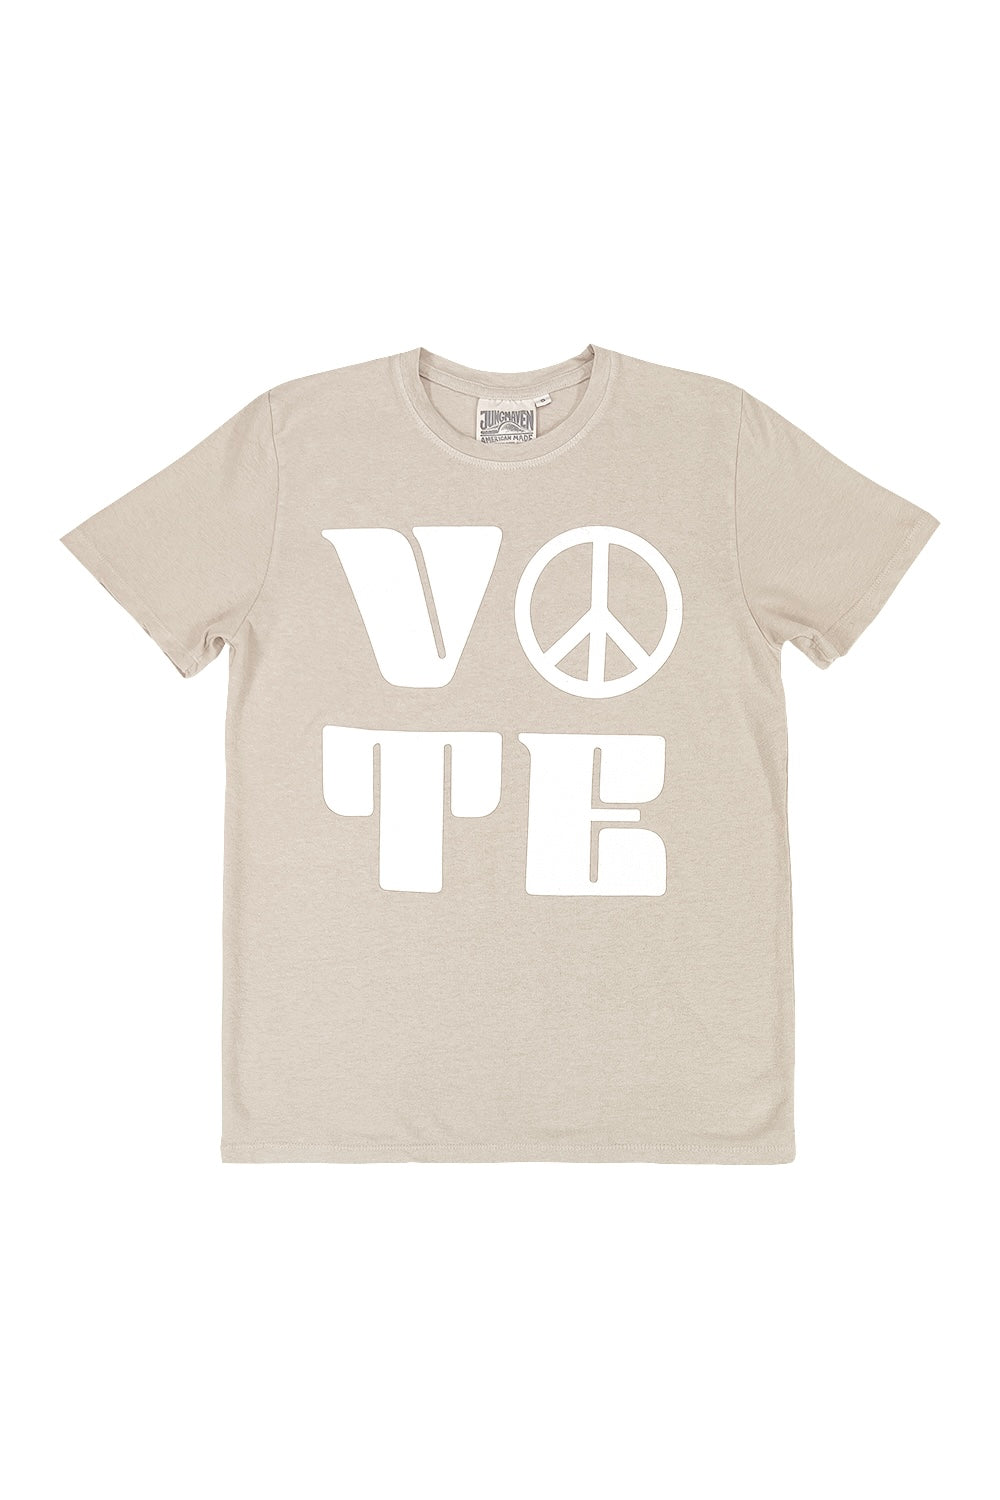 Vote Peace Baja Tee | Jungmaven Hemp Clothing & Accessories / Color: Canvas